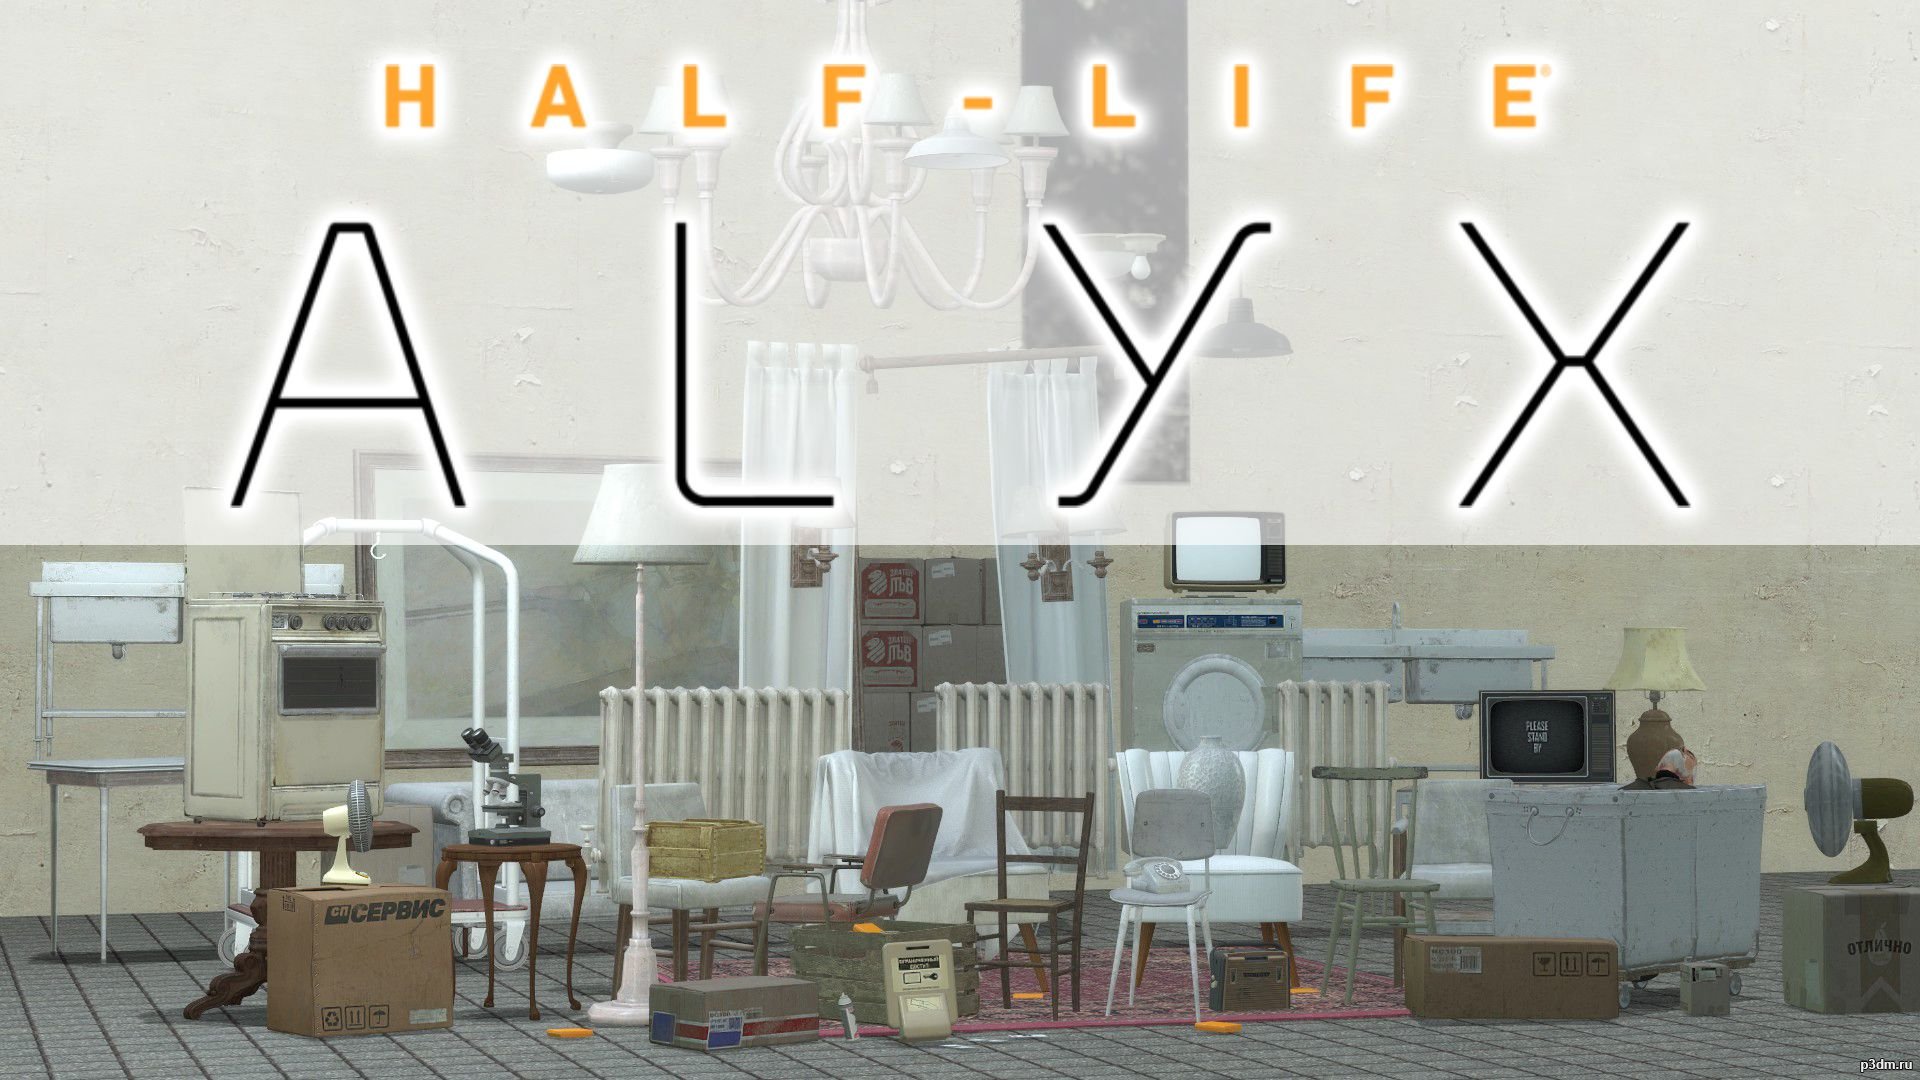 Half-Life: Alyx - Alyx  Half life, Life, Heroes of the storm